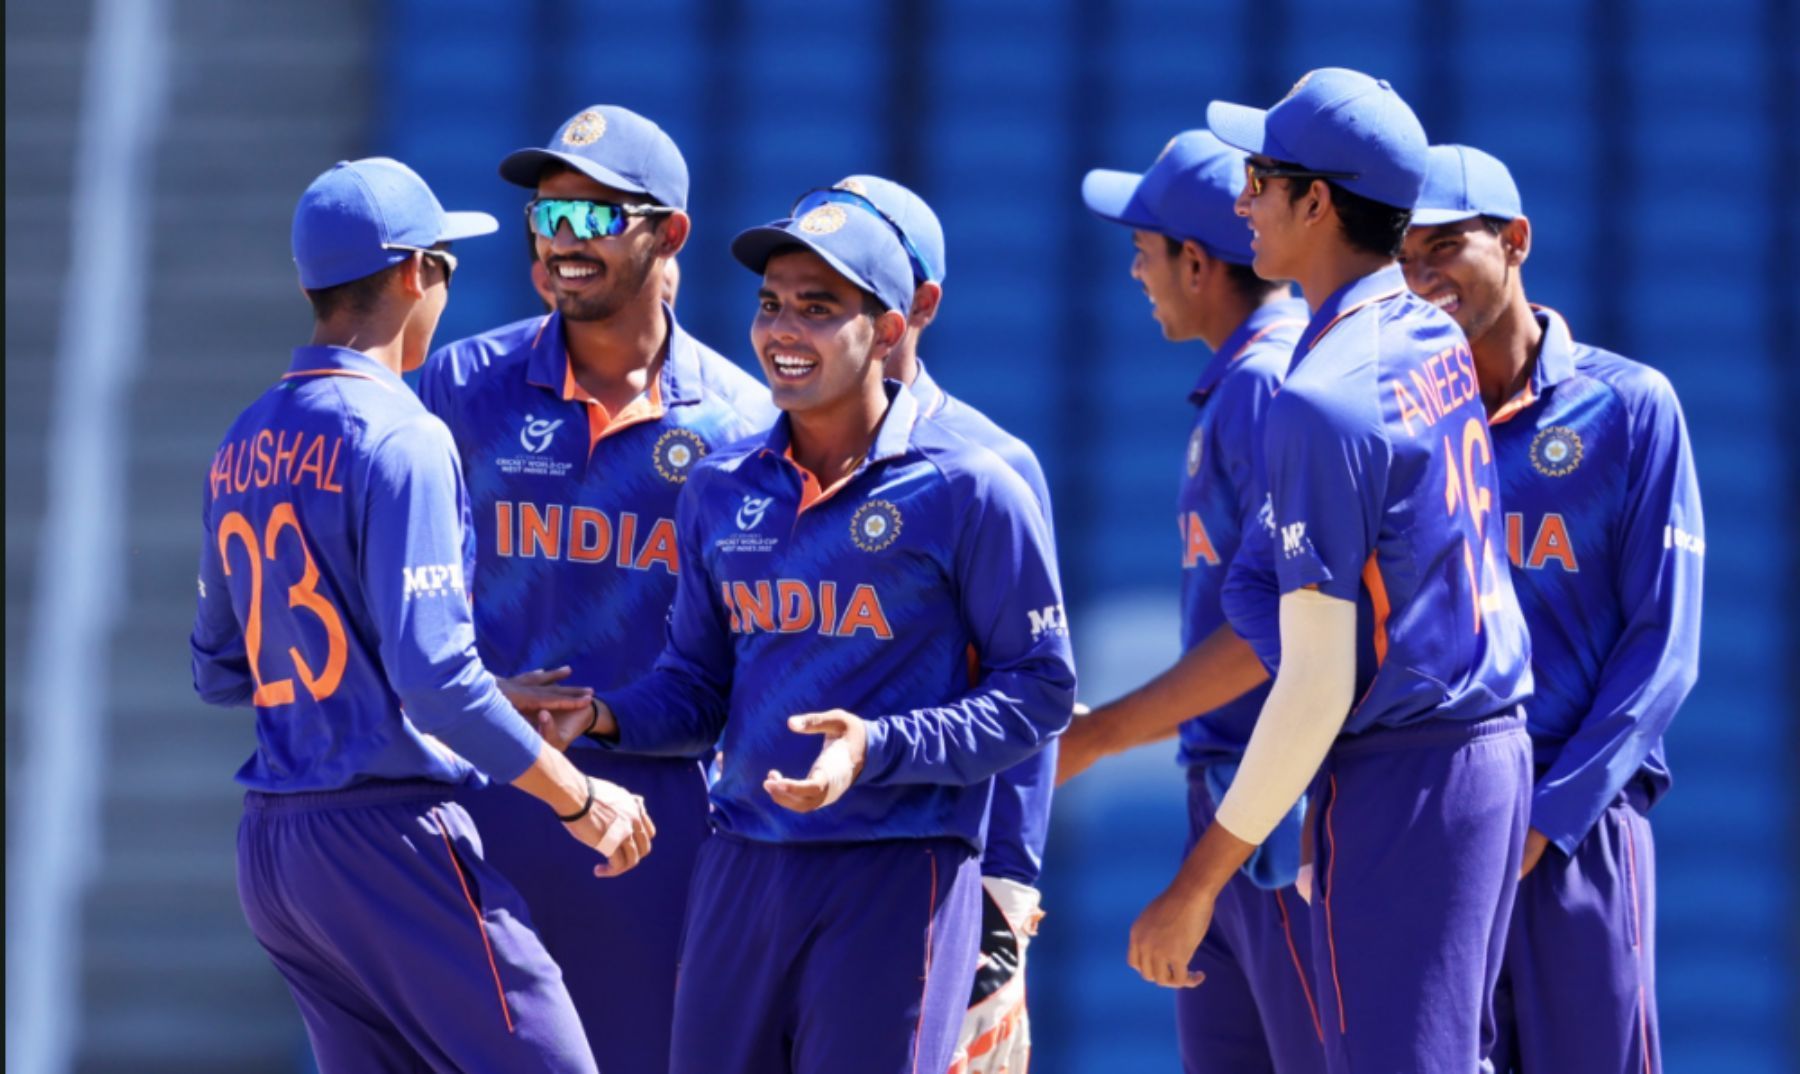 The India U19 team during their match against Uganda. Pic: BCCI